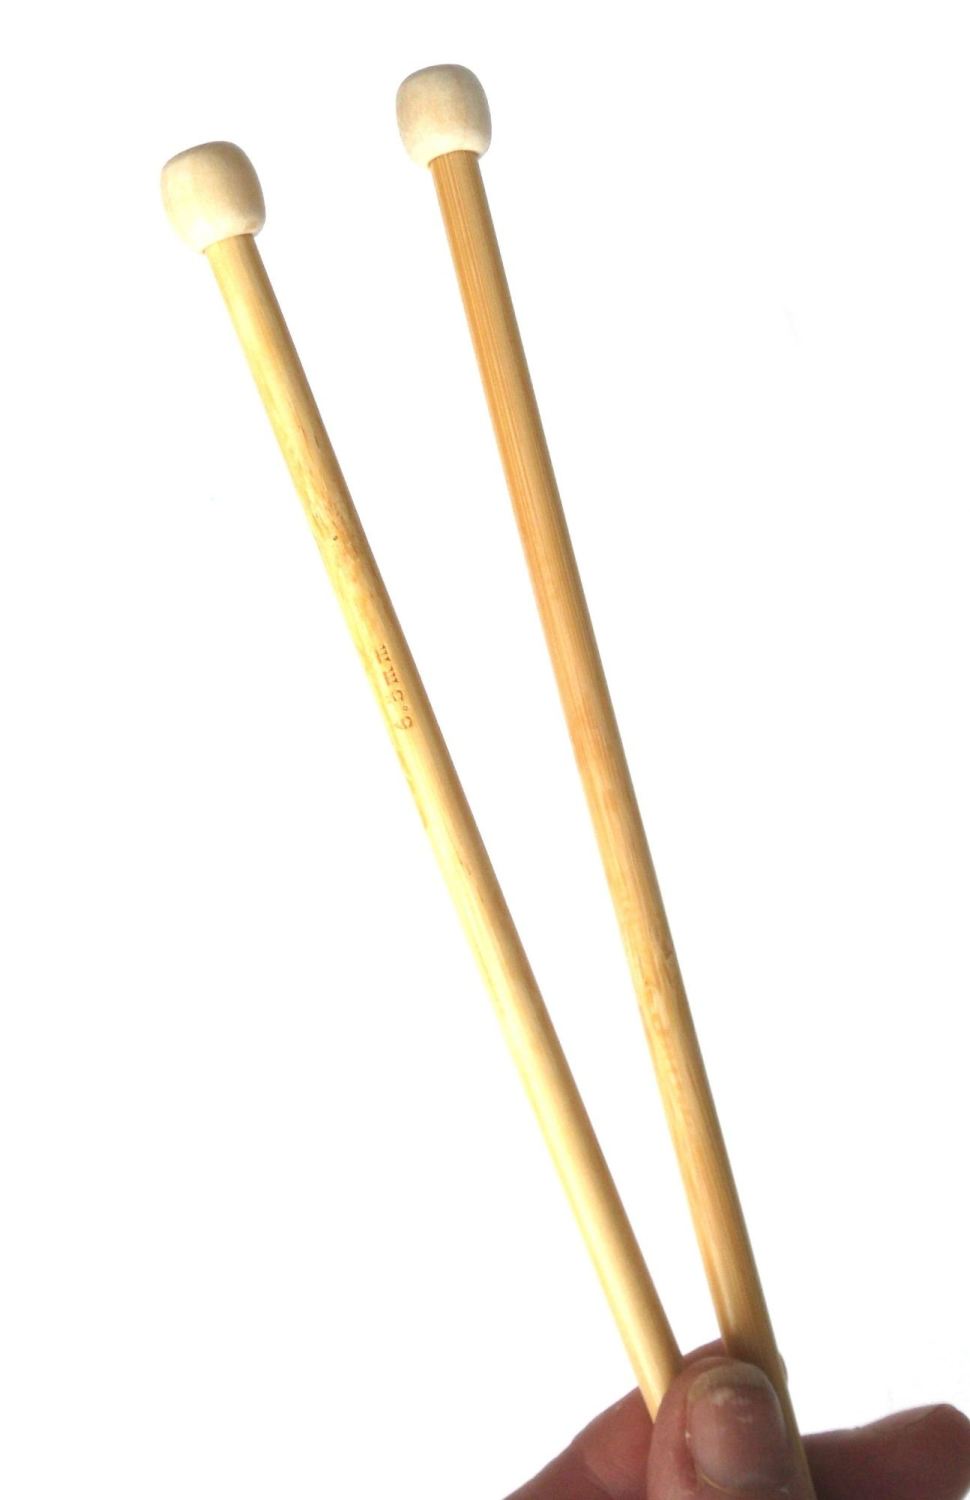 6 7 5mm bamboo knitting needles 35 cm long 